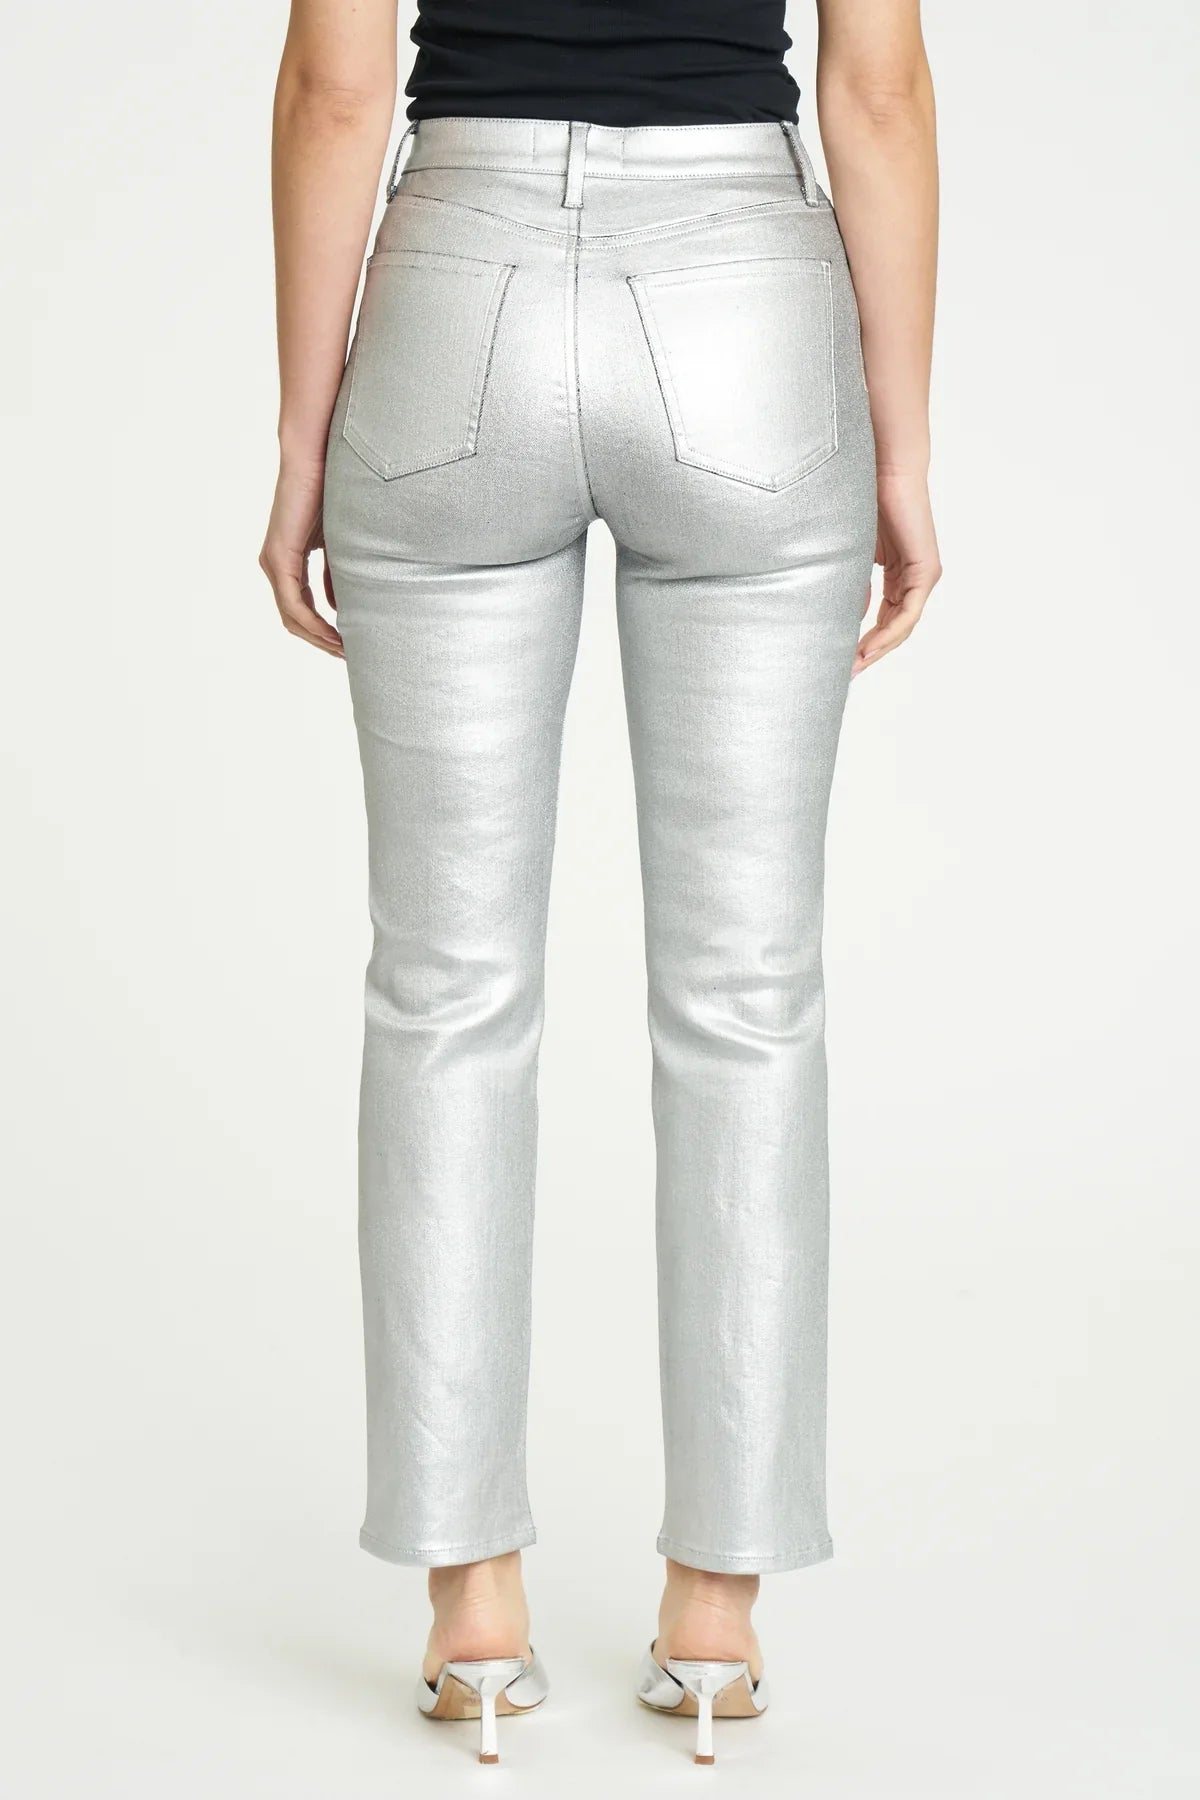 Smarty Pants Trouser Silver, Pant Bottom by Daze | LIT Boutique